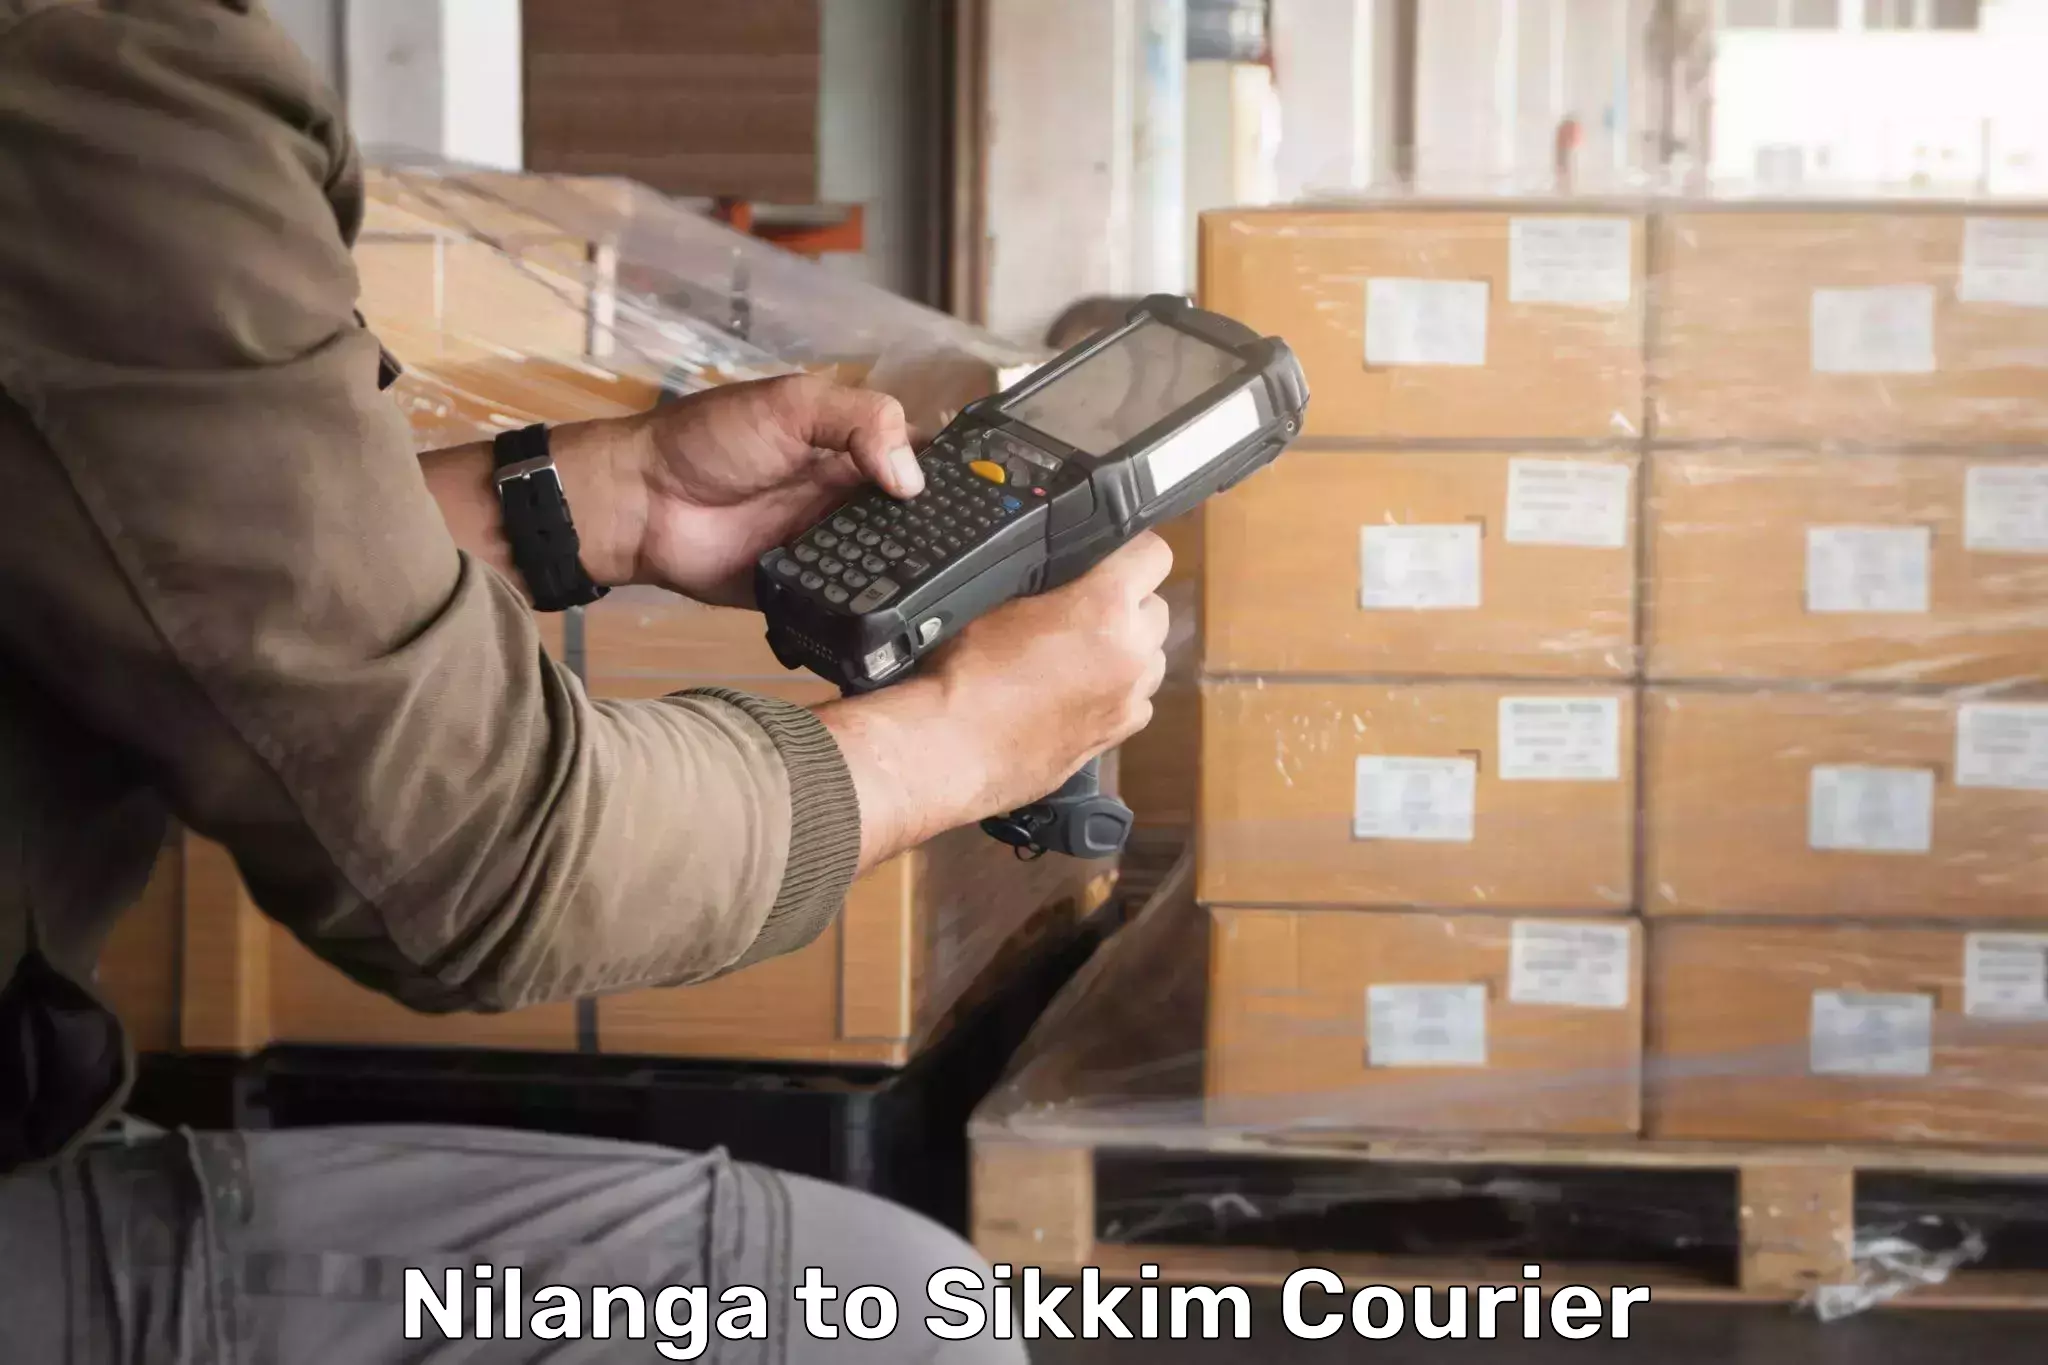 24-hour courier service Nilanga to Rangpo